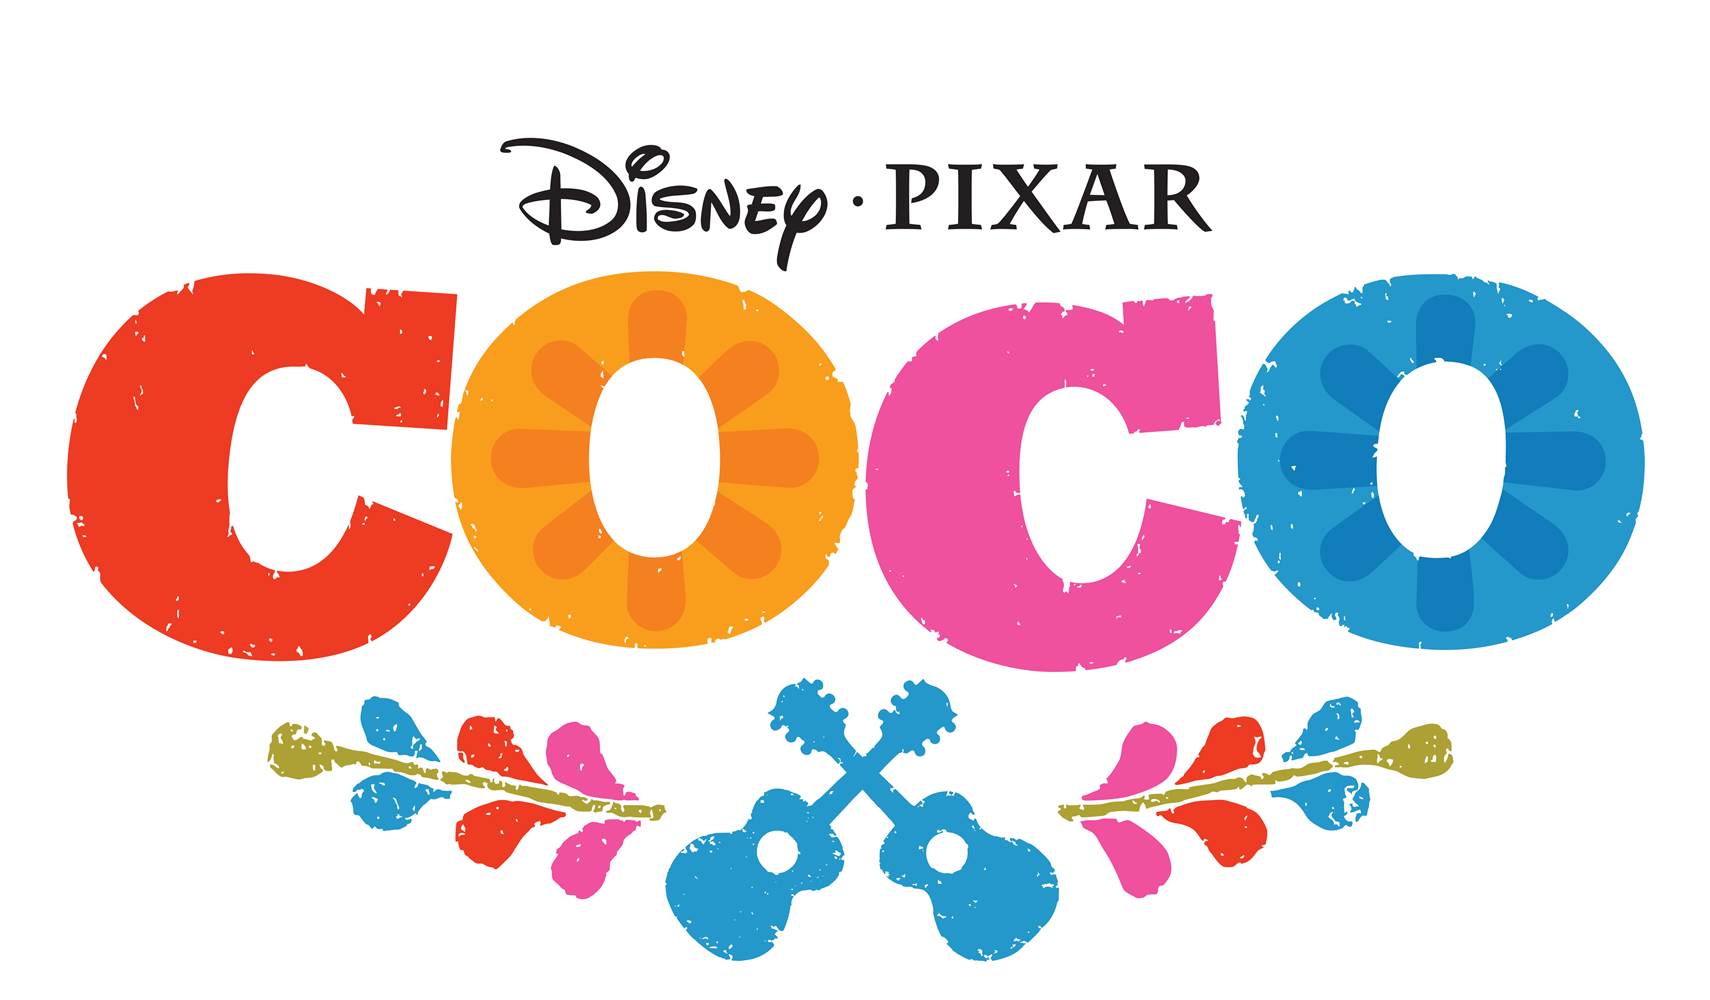 Disney Movie Logo - Coco Movie Image - first look at Miguel from Disney PIxar's 2017 film